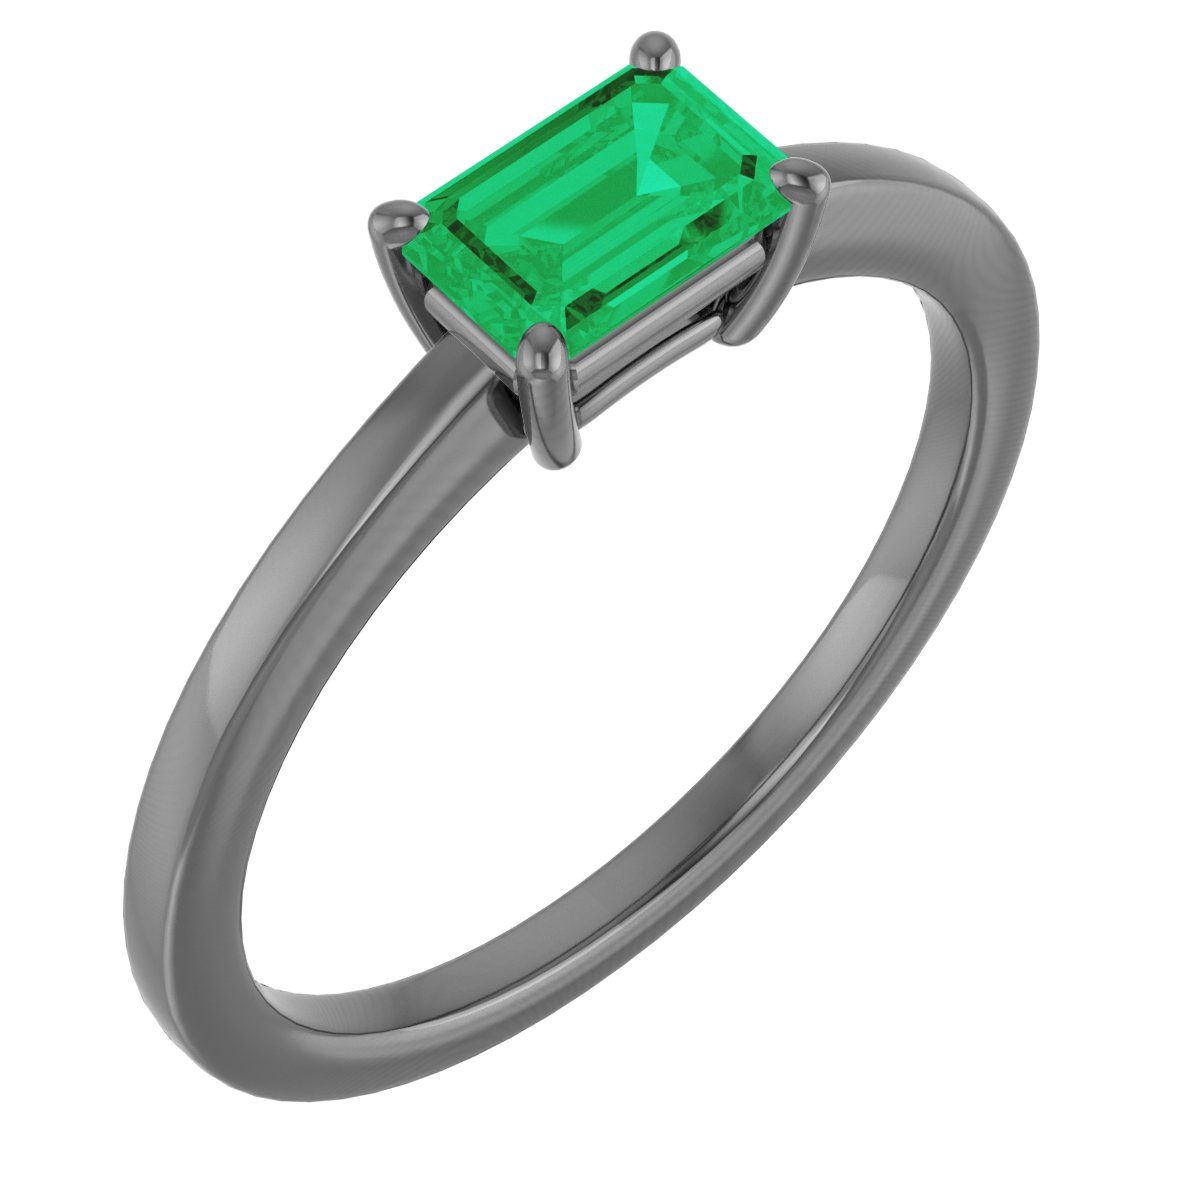 14K Yellow Lab-Grown Emerald Ring 